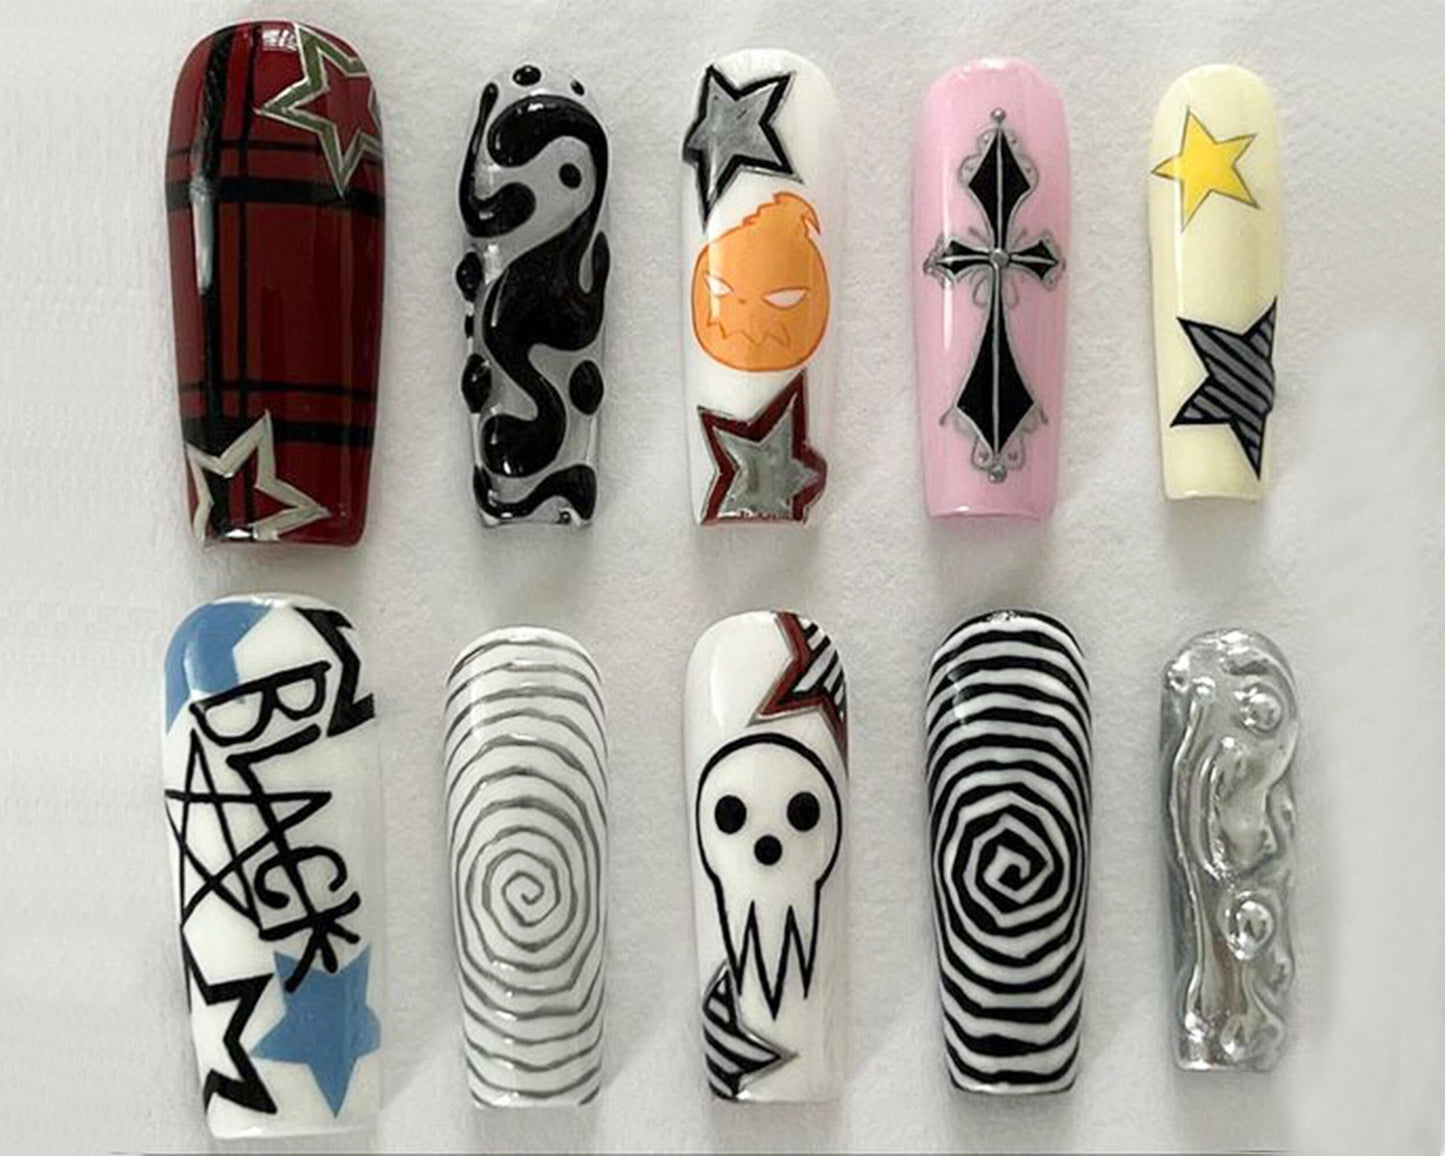 Festive Halloween Nails | Premium Halloween Nails with 3D Designs | Abstract Festive Nail Art | Unique Halloween Nail Set | J21